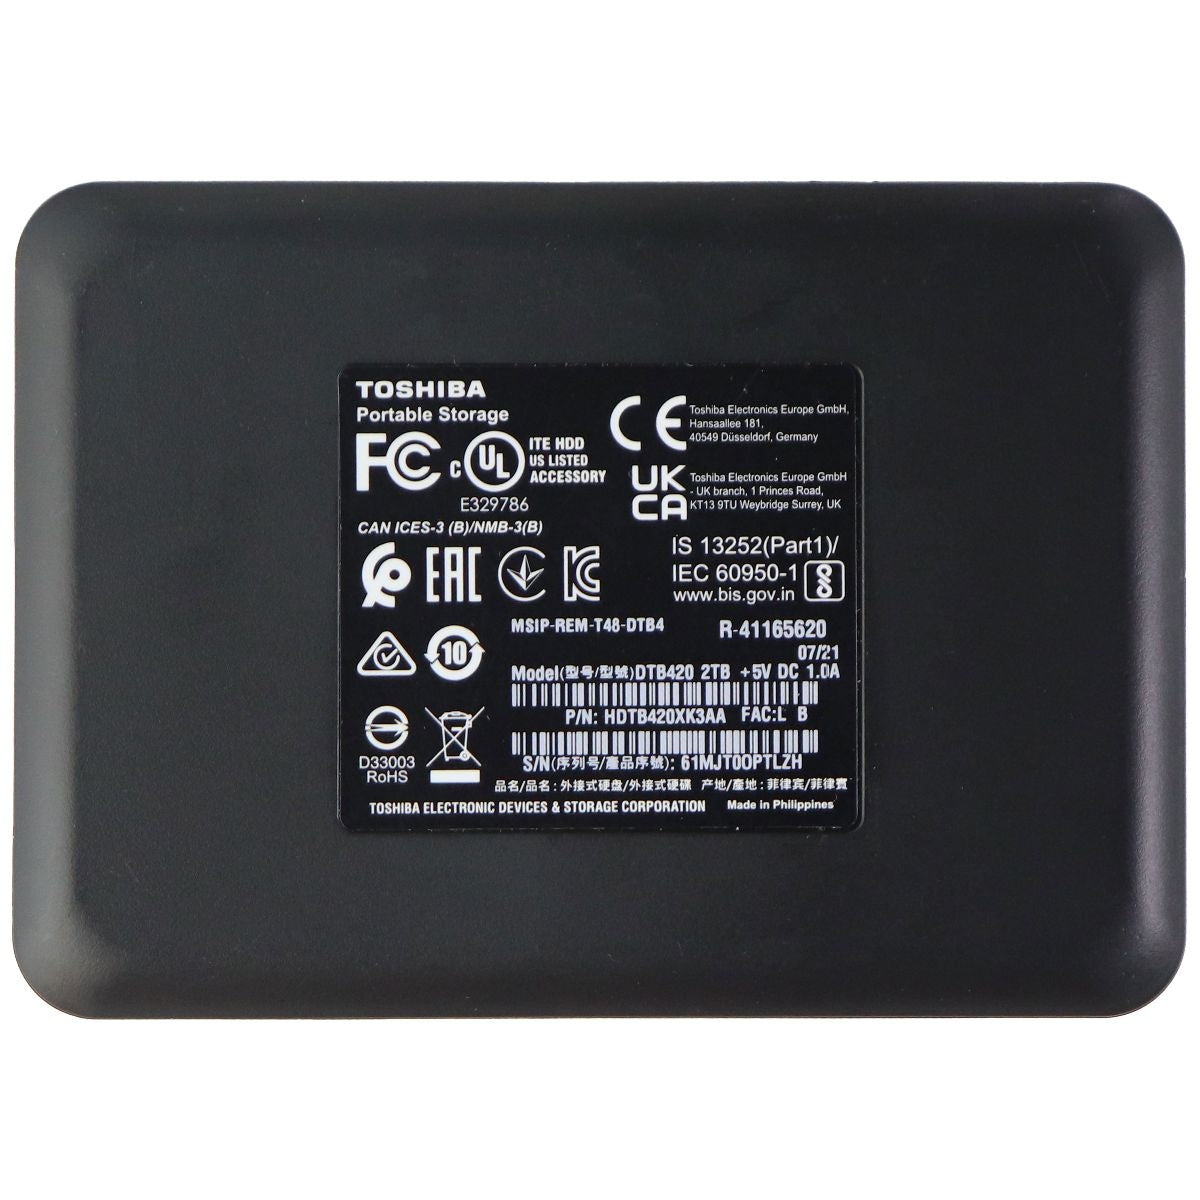 Toshiba Canvio Basics 2TB Portable External Hard Drive USB 3.0, Black (DTB420) Digital Storage - External Hard Disk Drives, HDD Toshiba    - Simple Cell Bulk Wholesale Pricing - USA Seller